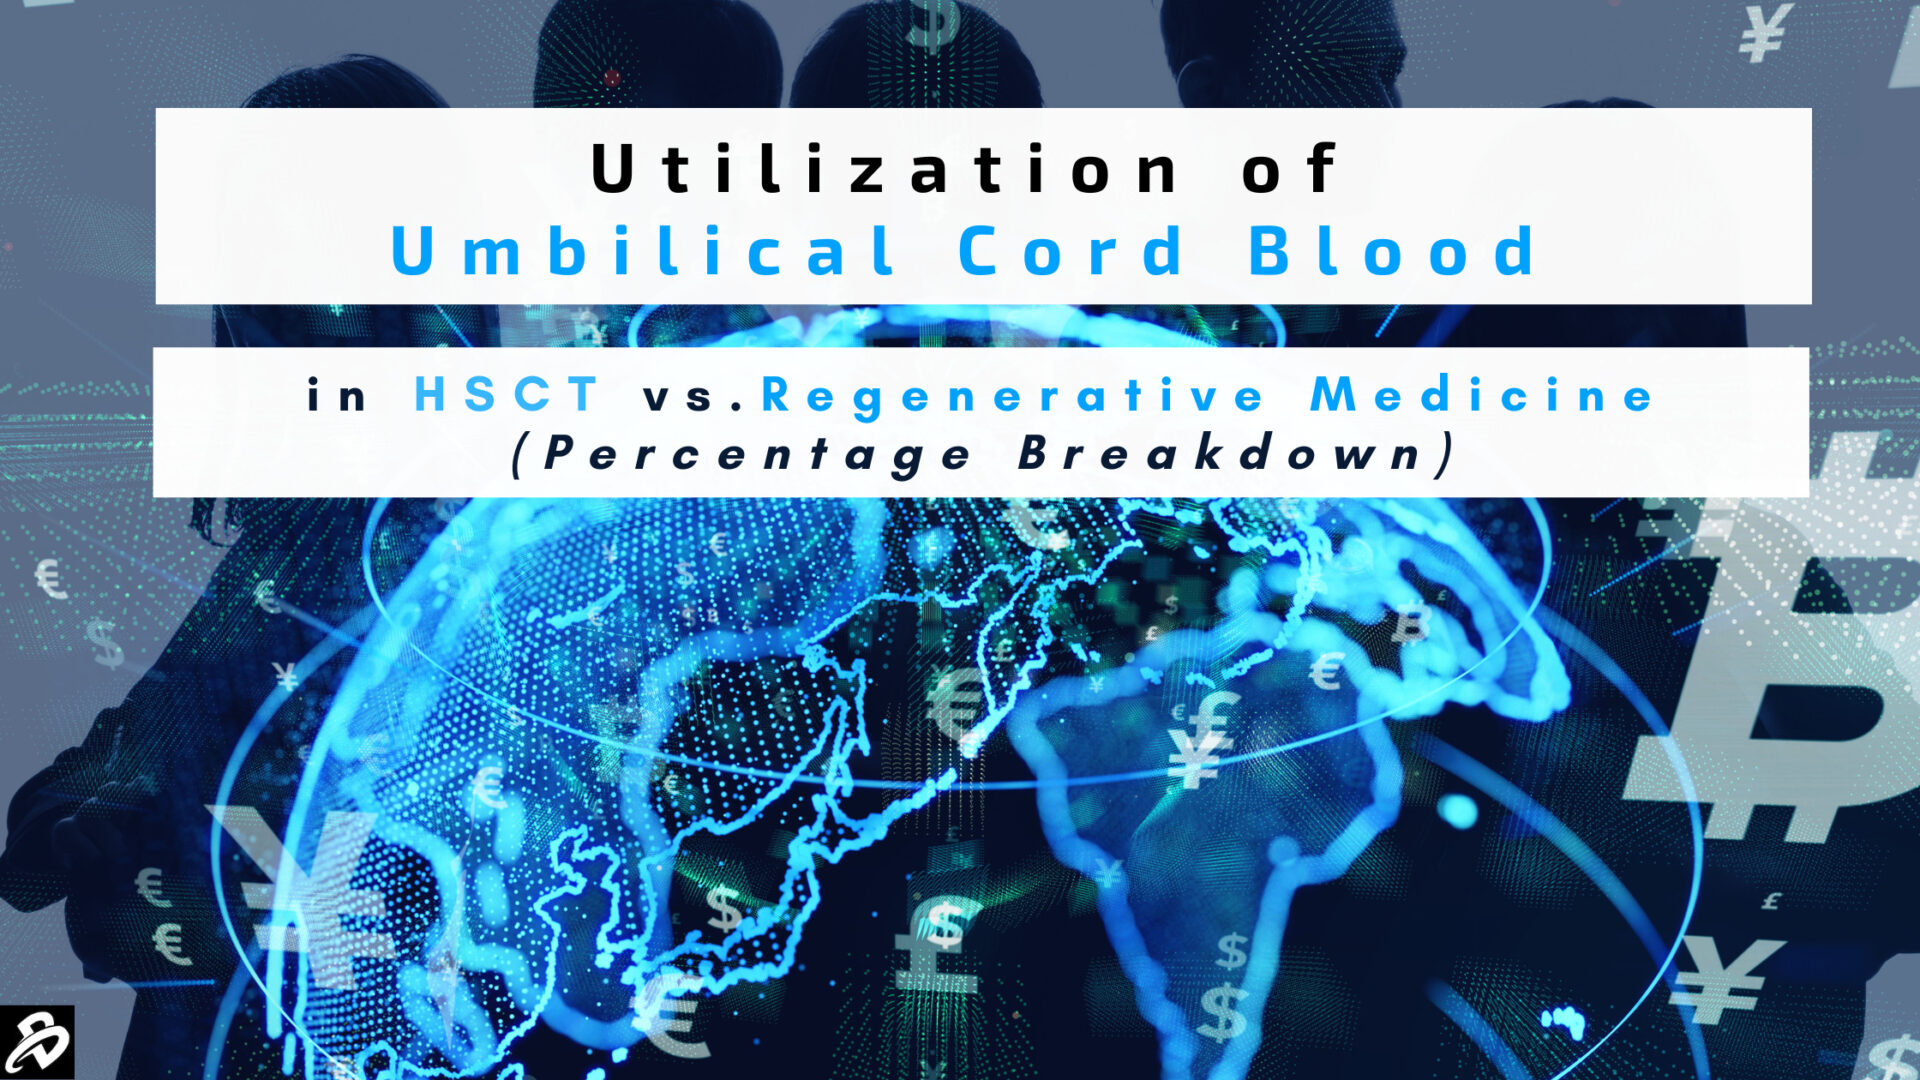 Utilization of cord blood in HSCT vs regenerative medicine